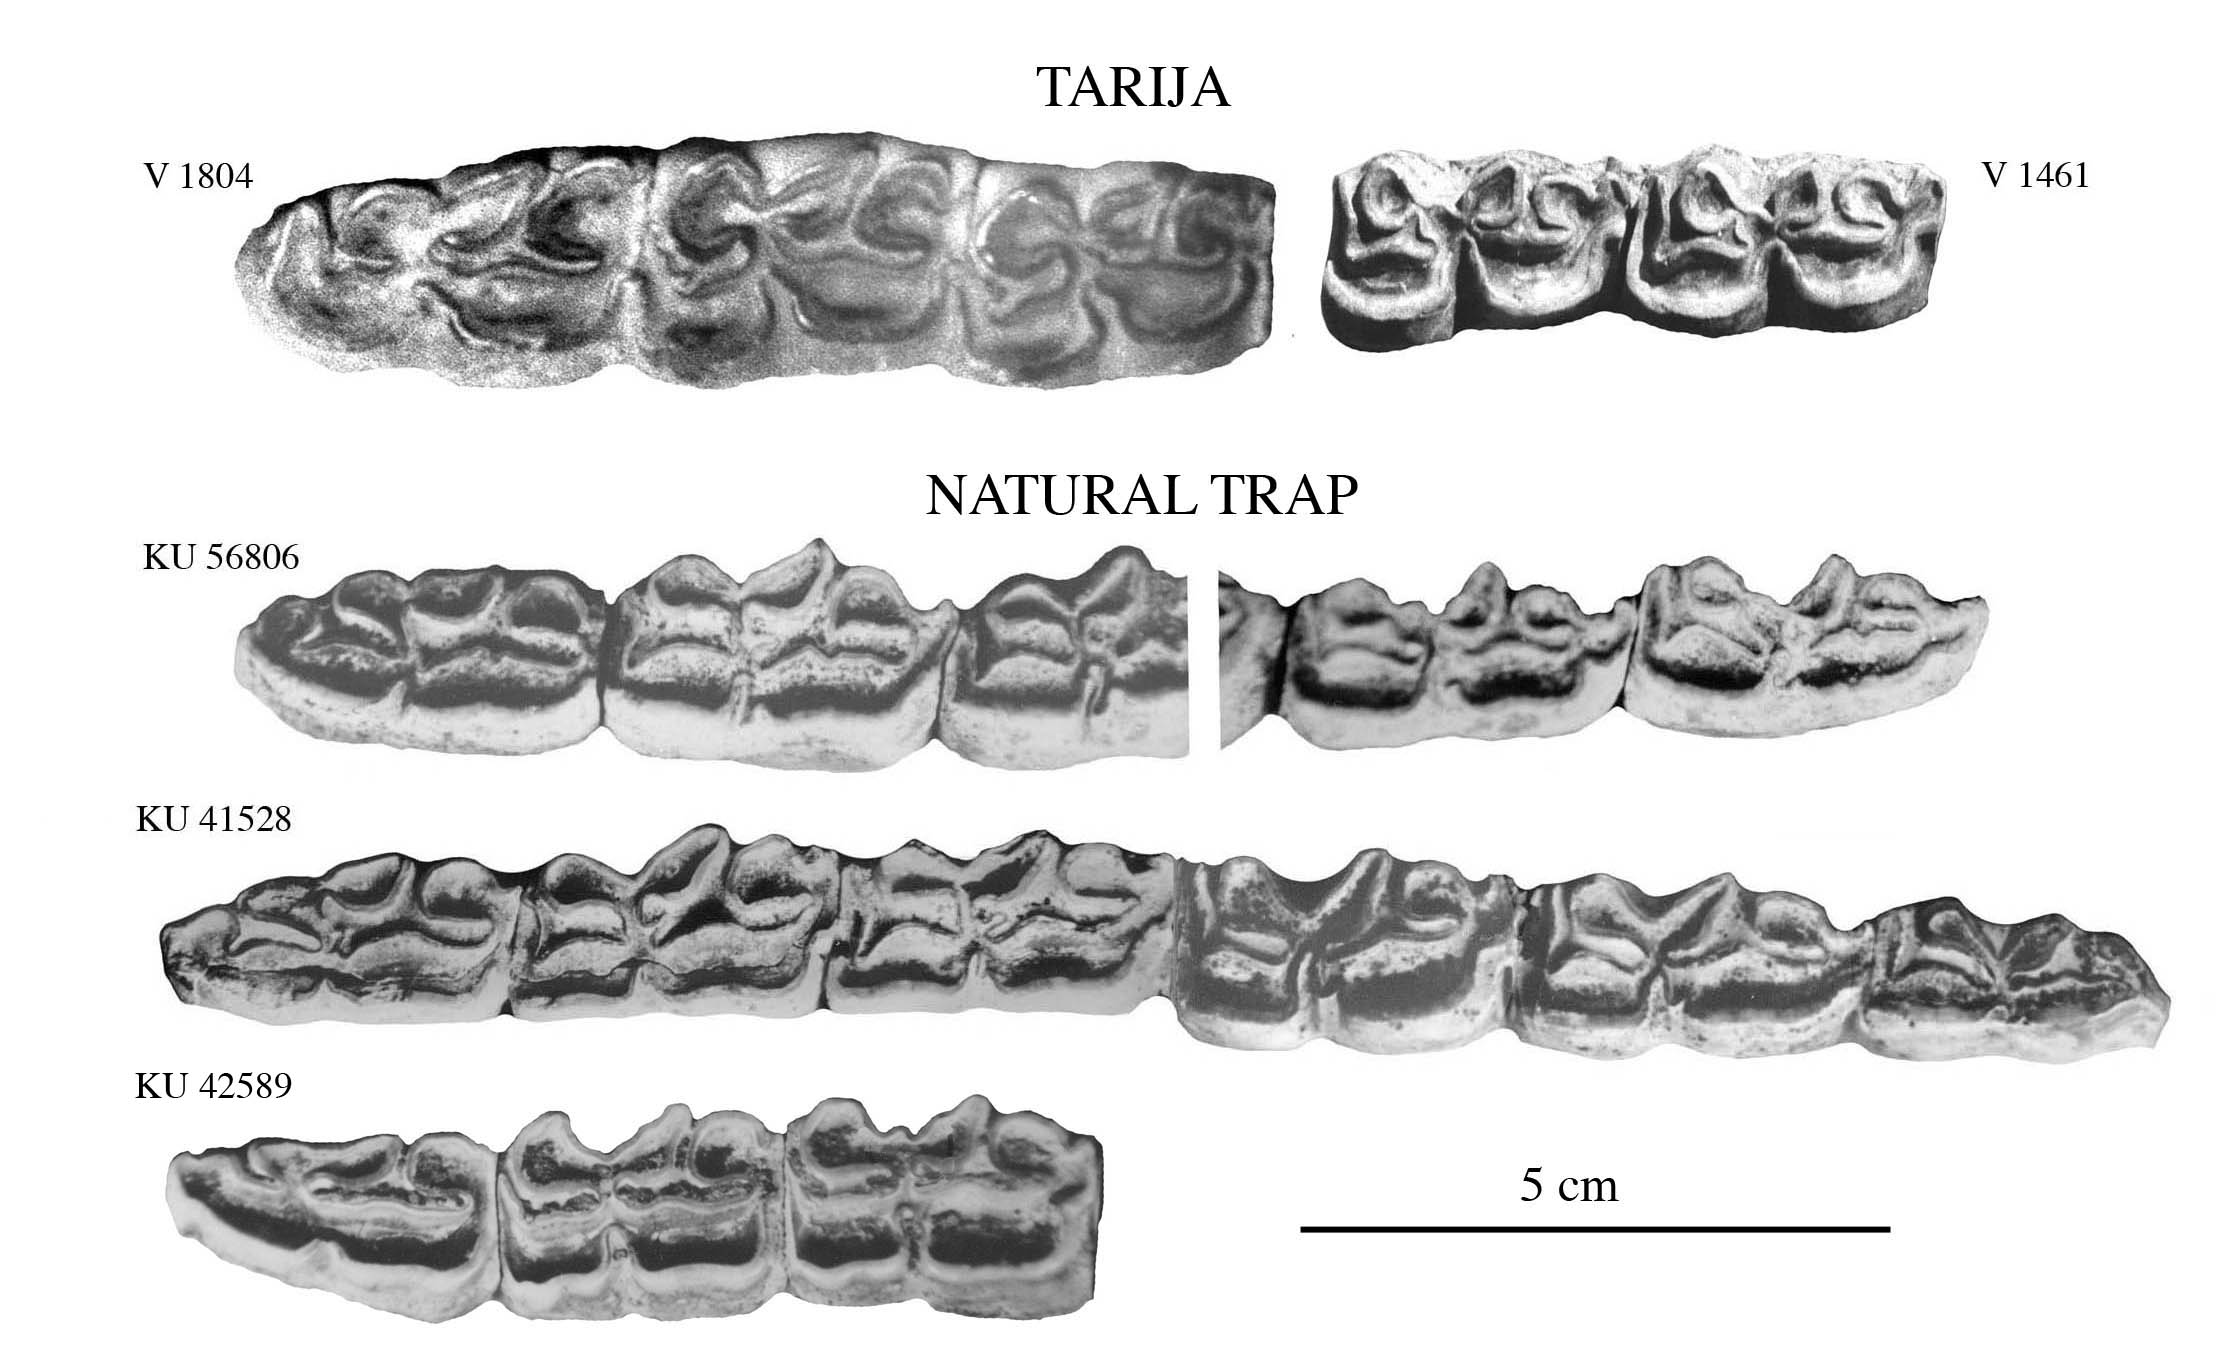 Fig.3 Lower Cheek teeth, Natural Trap and Tarija